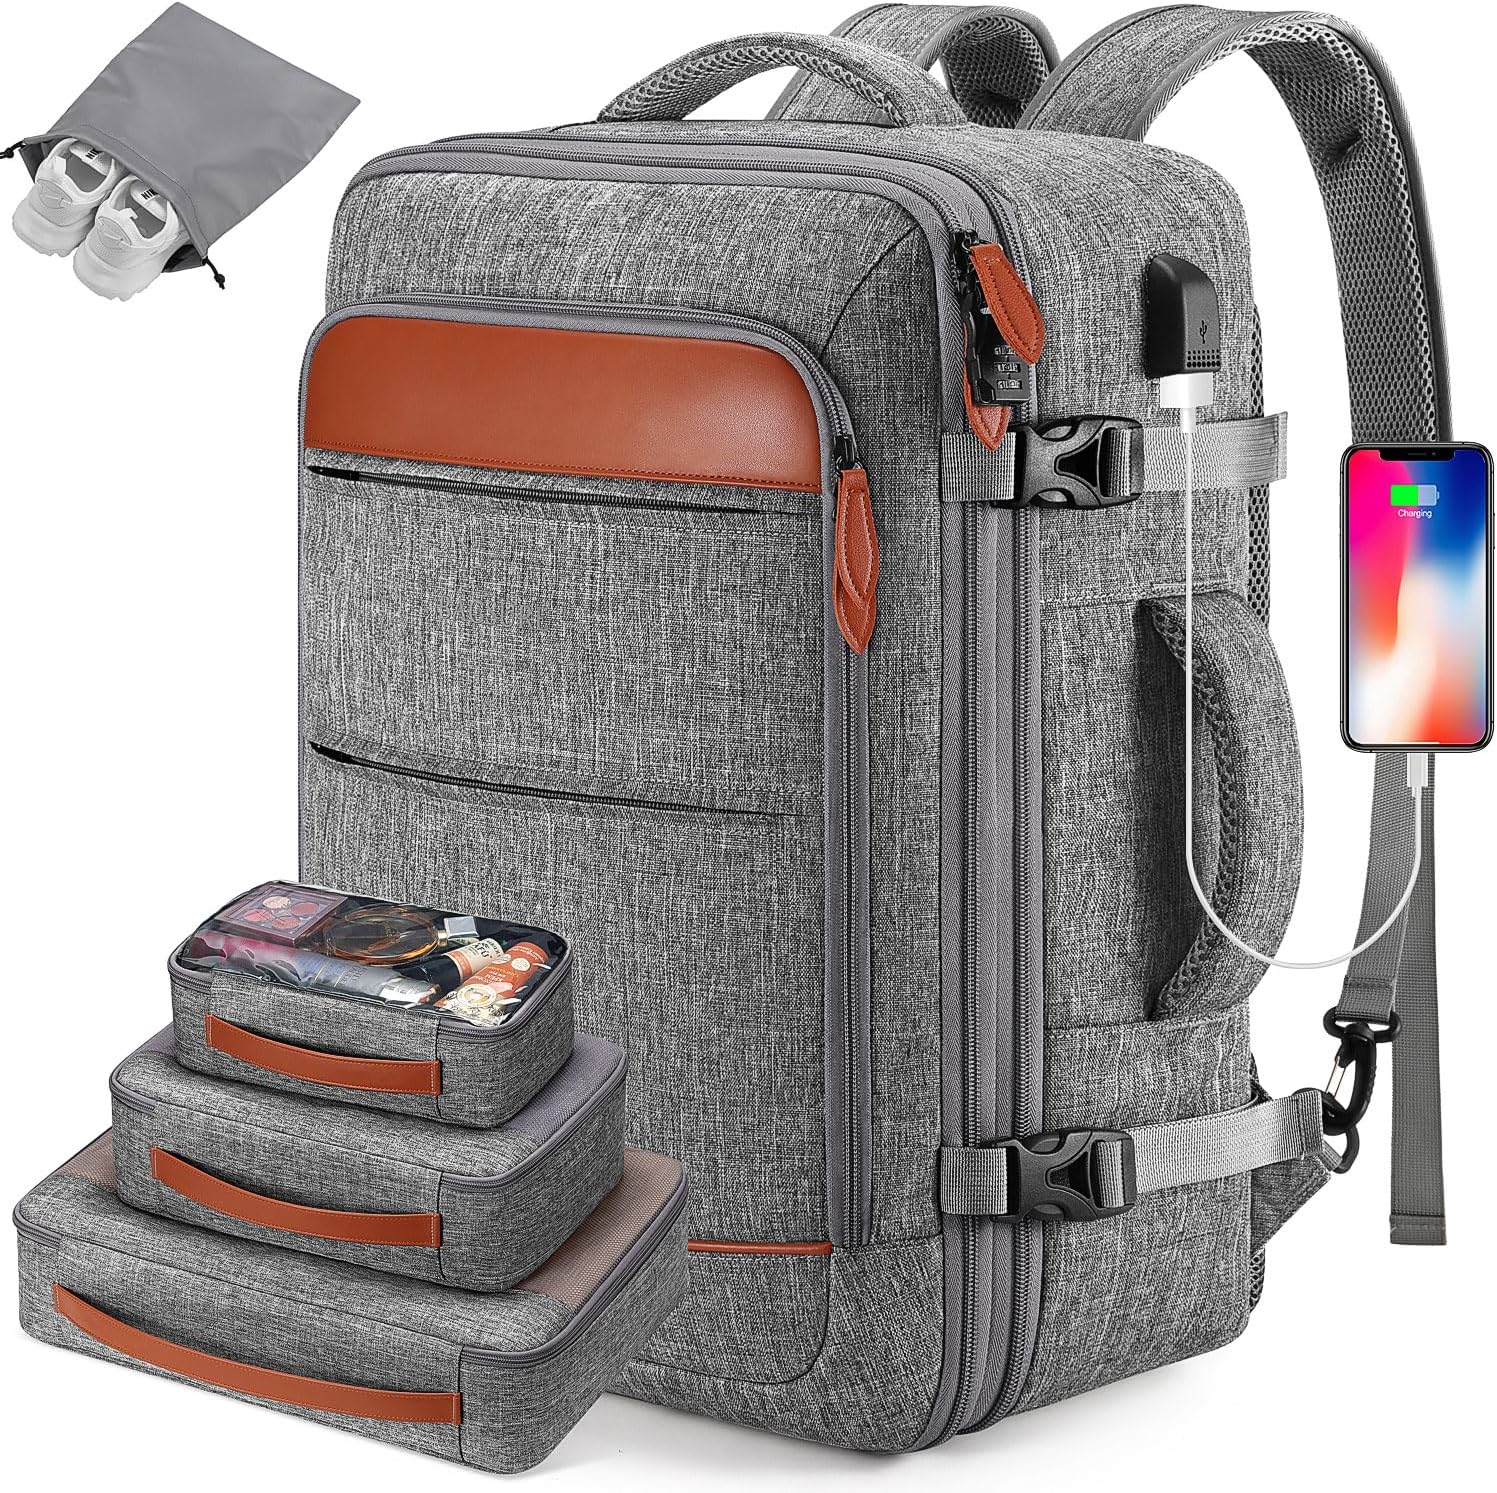 Time-Sensitive Deal: Bagsure Travel Backpack - 30% Off